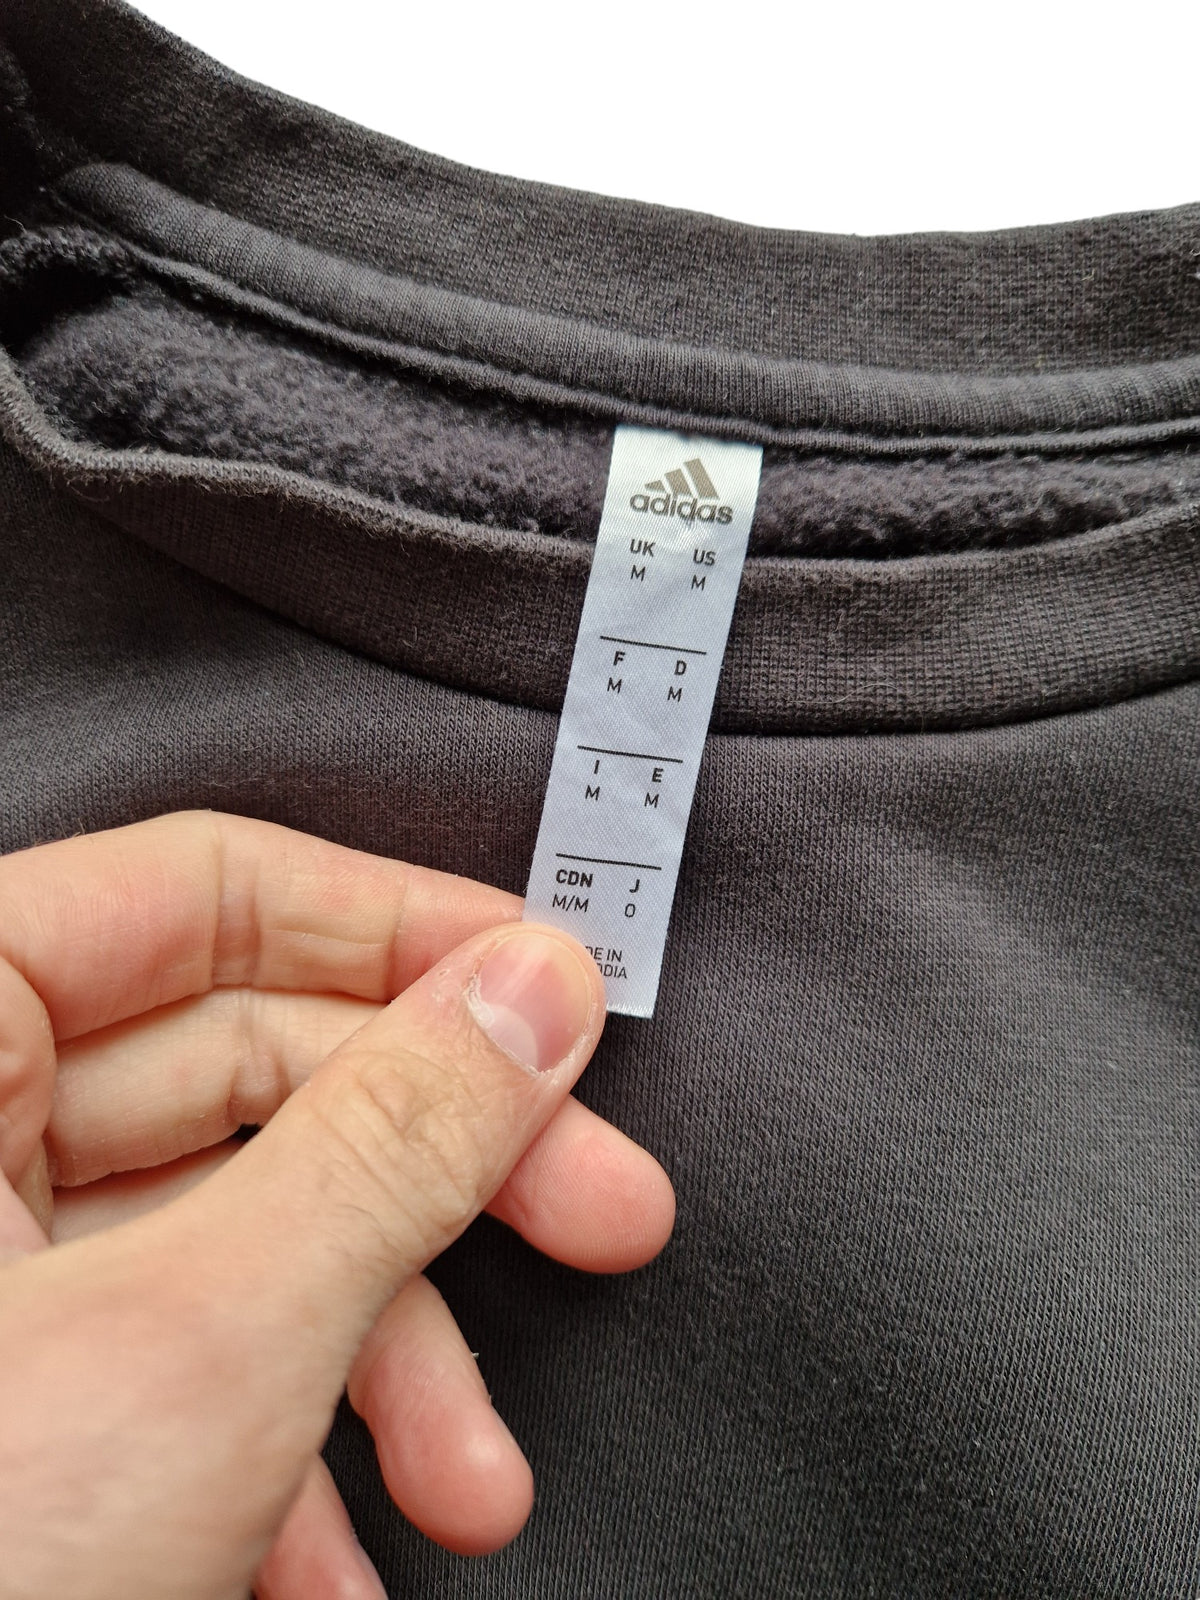 Adidas Small Logo Sweatshirt - Size Small